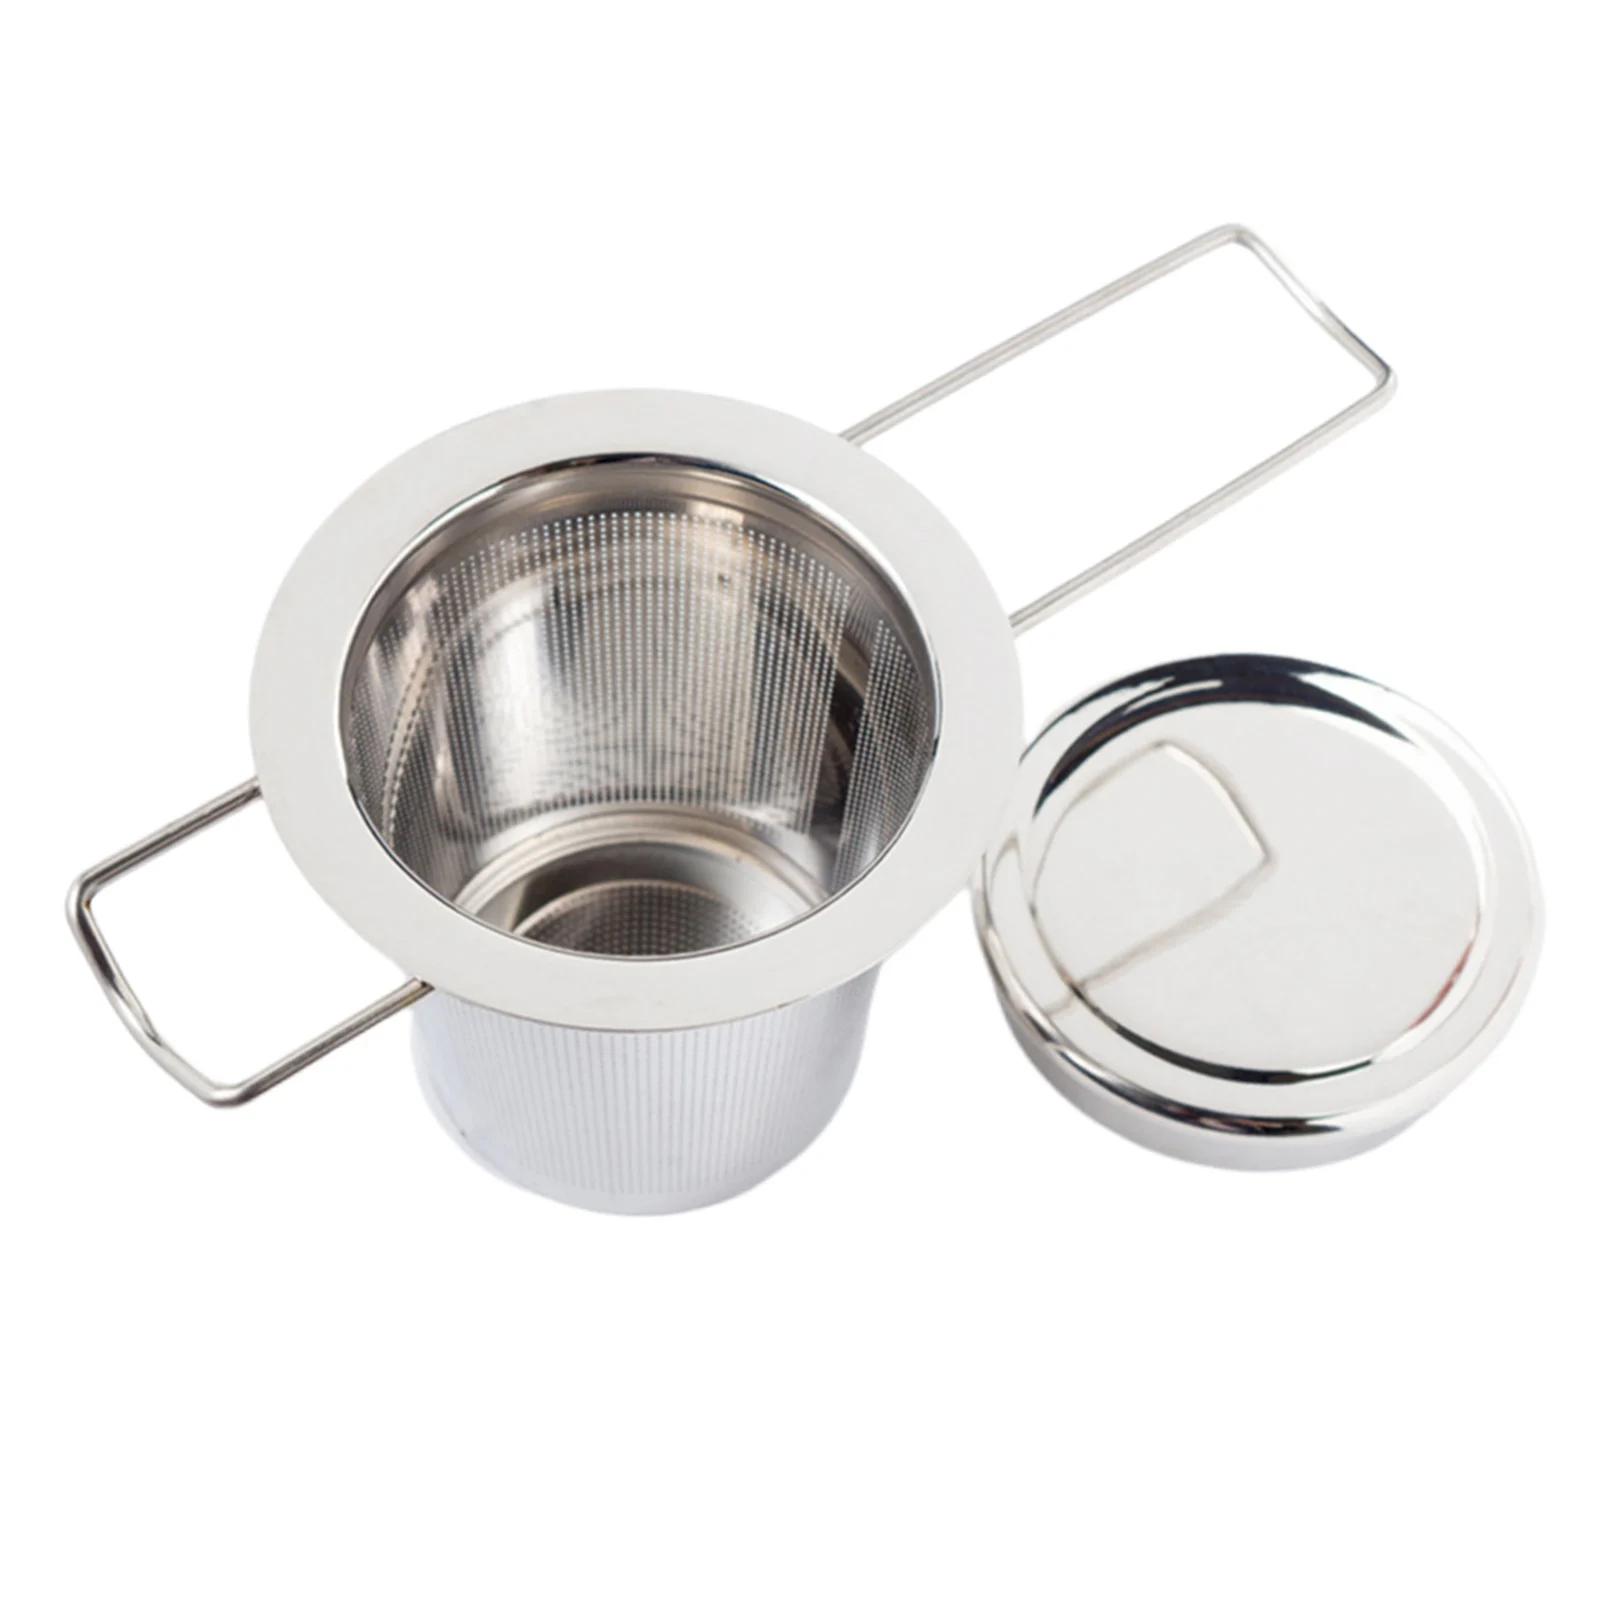 Stainless Steel Tea Infuser Tea Filter Steeping Mesh Strainer with Lid Tea Accessories